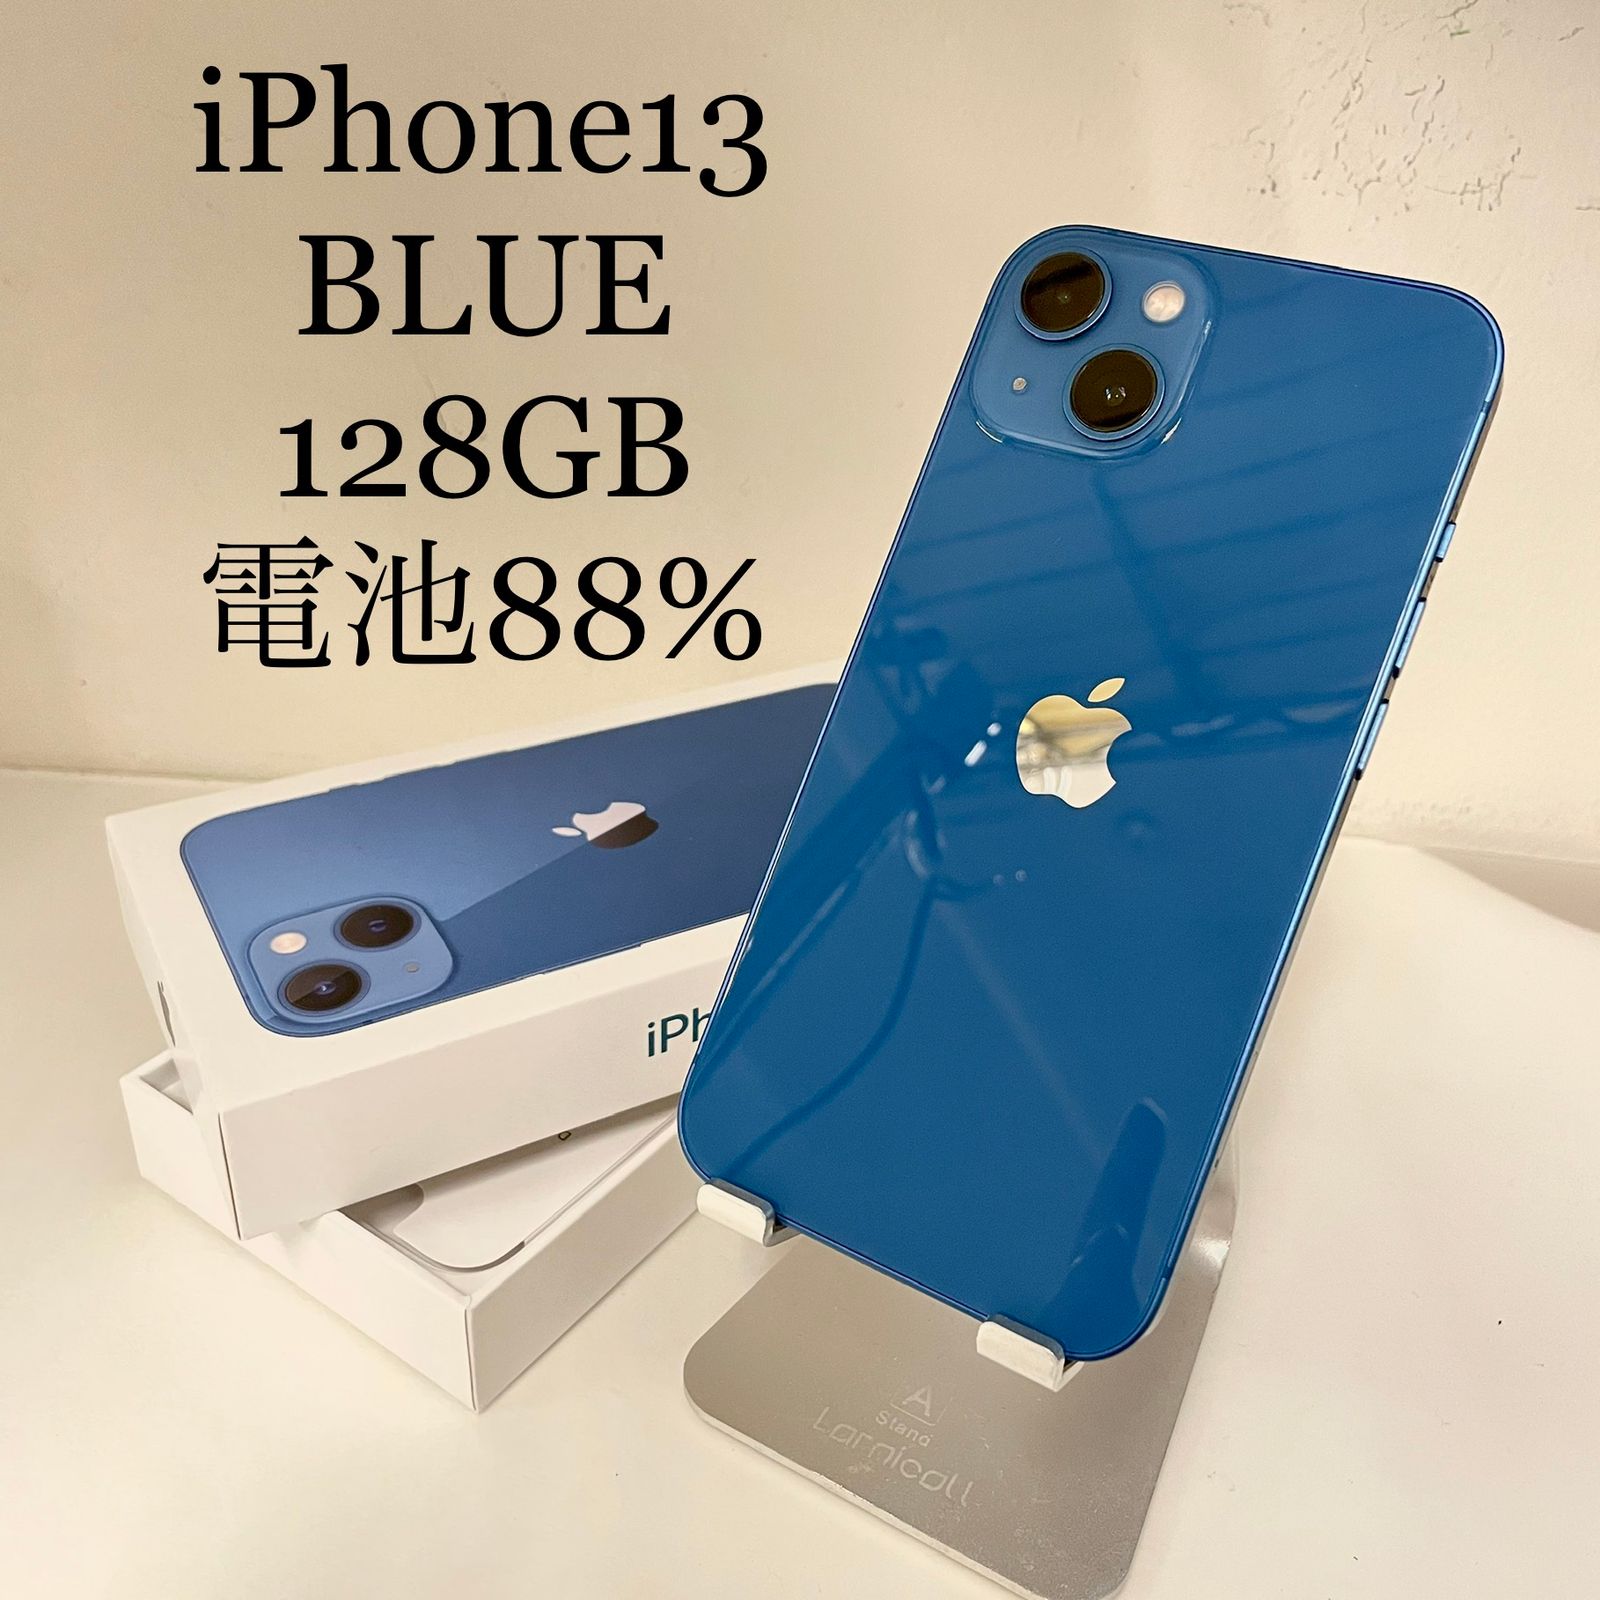 iPhone13 ブルー 128GB 電池残量88% - ネコモバイル - メルカリ